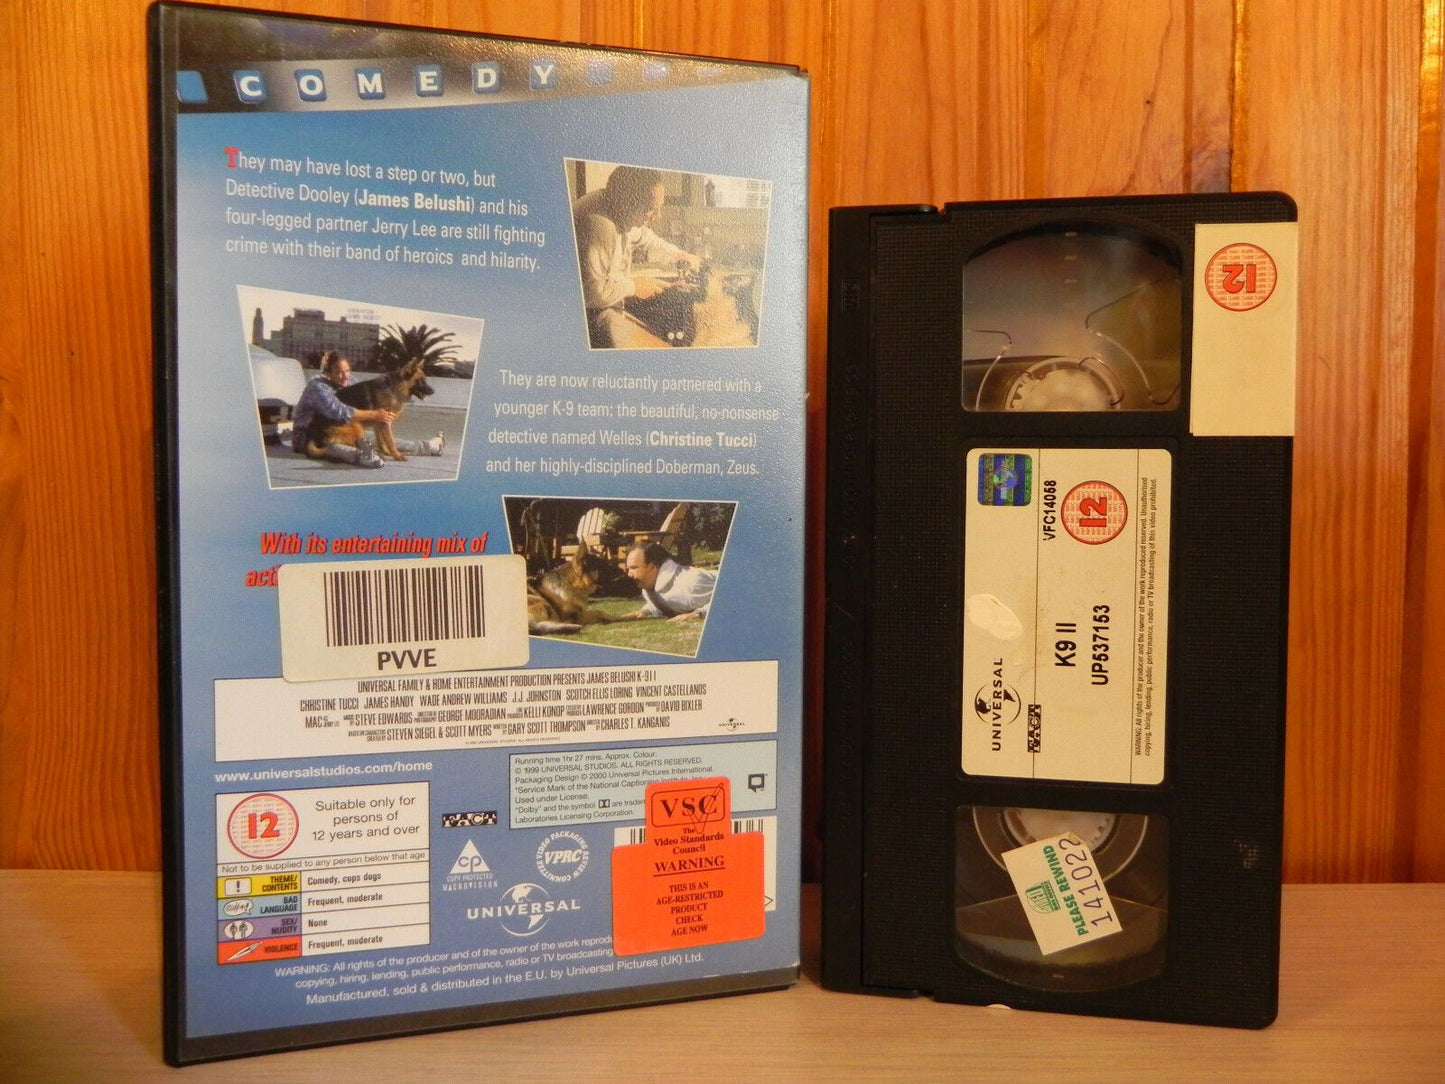 K-911 - Sequel To K-9 - James Belushi - Fast Action Comedy - Ex-Rental - VHS-